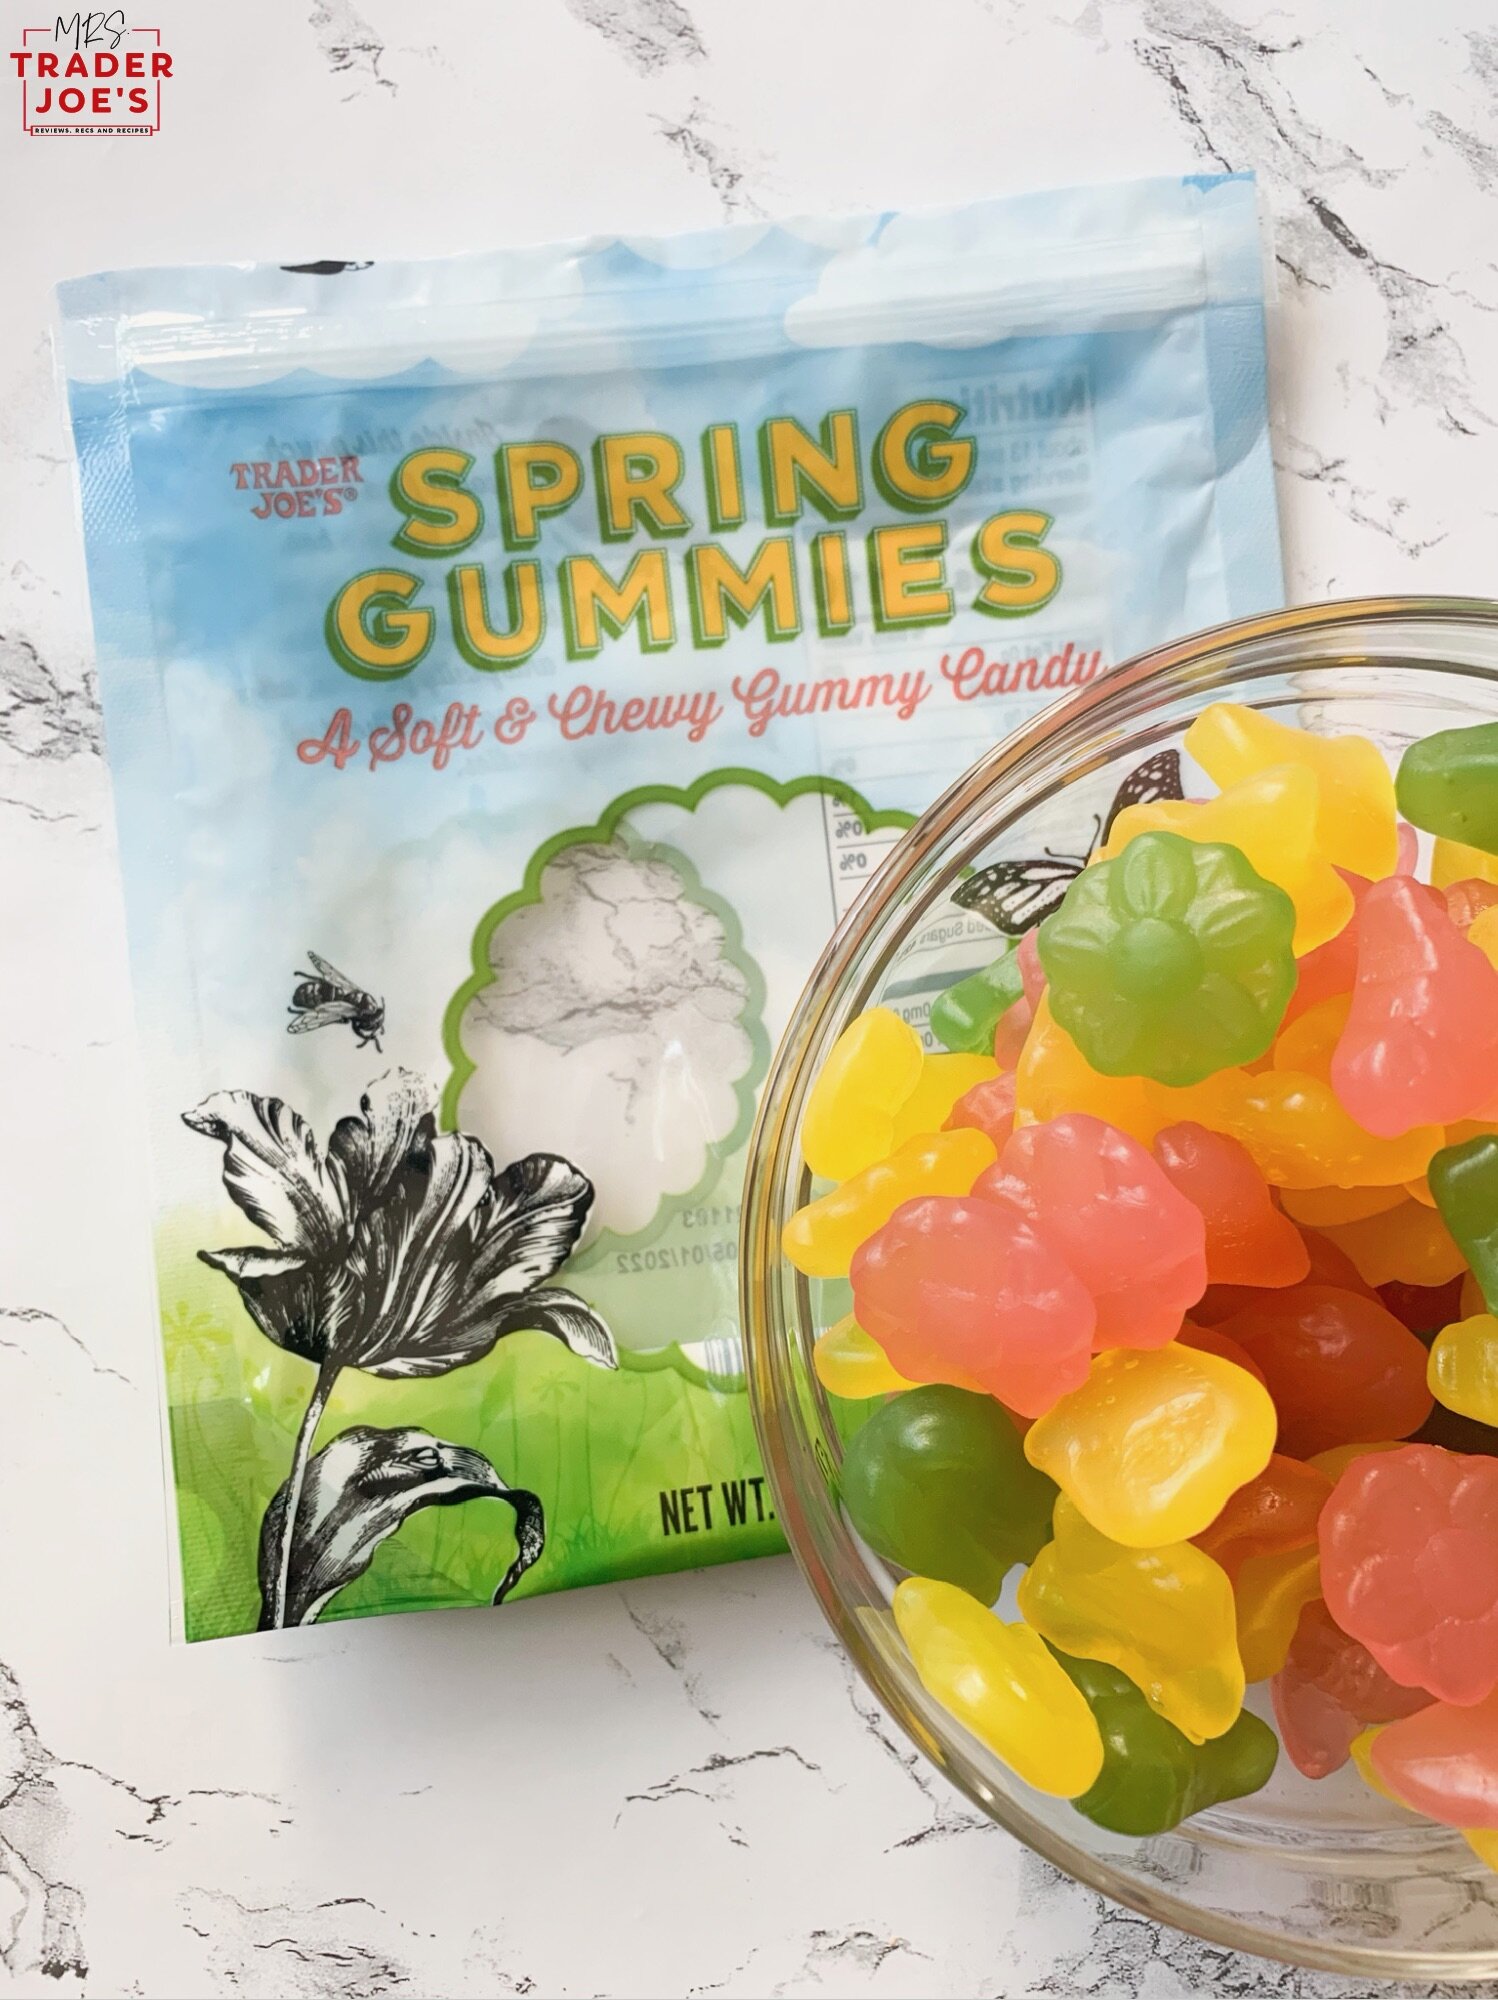 Spring Gummies — Mrs. Trader Joe's